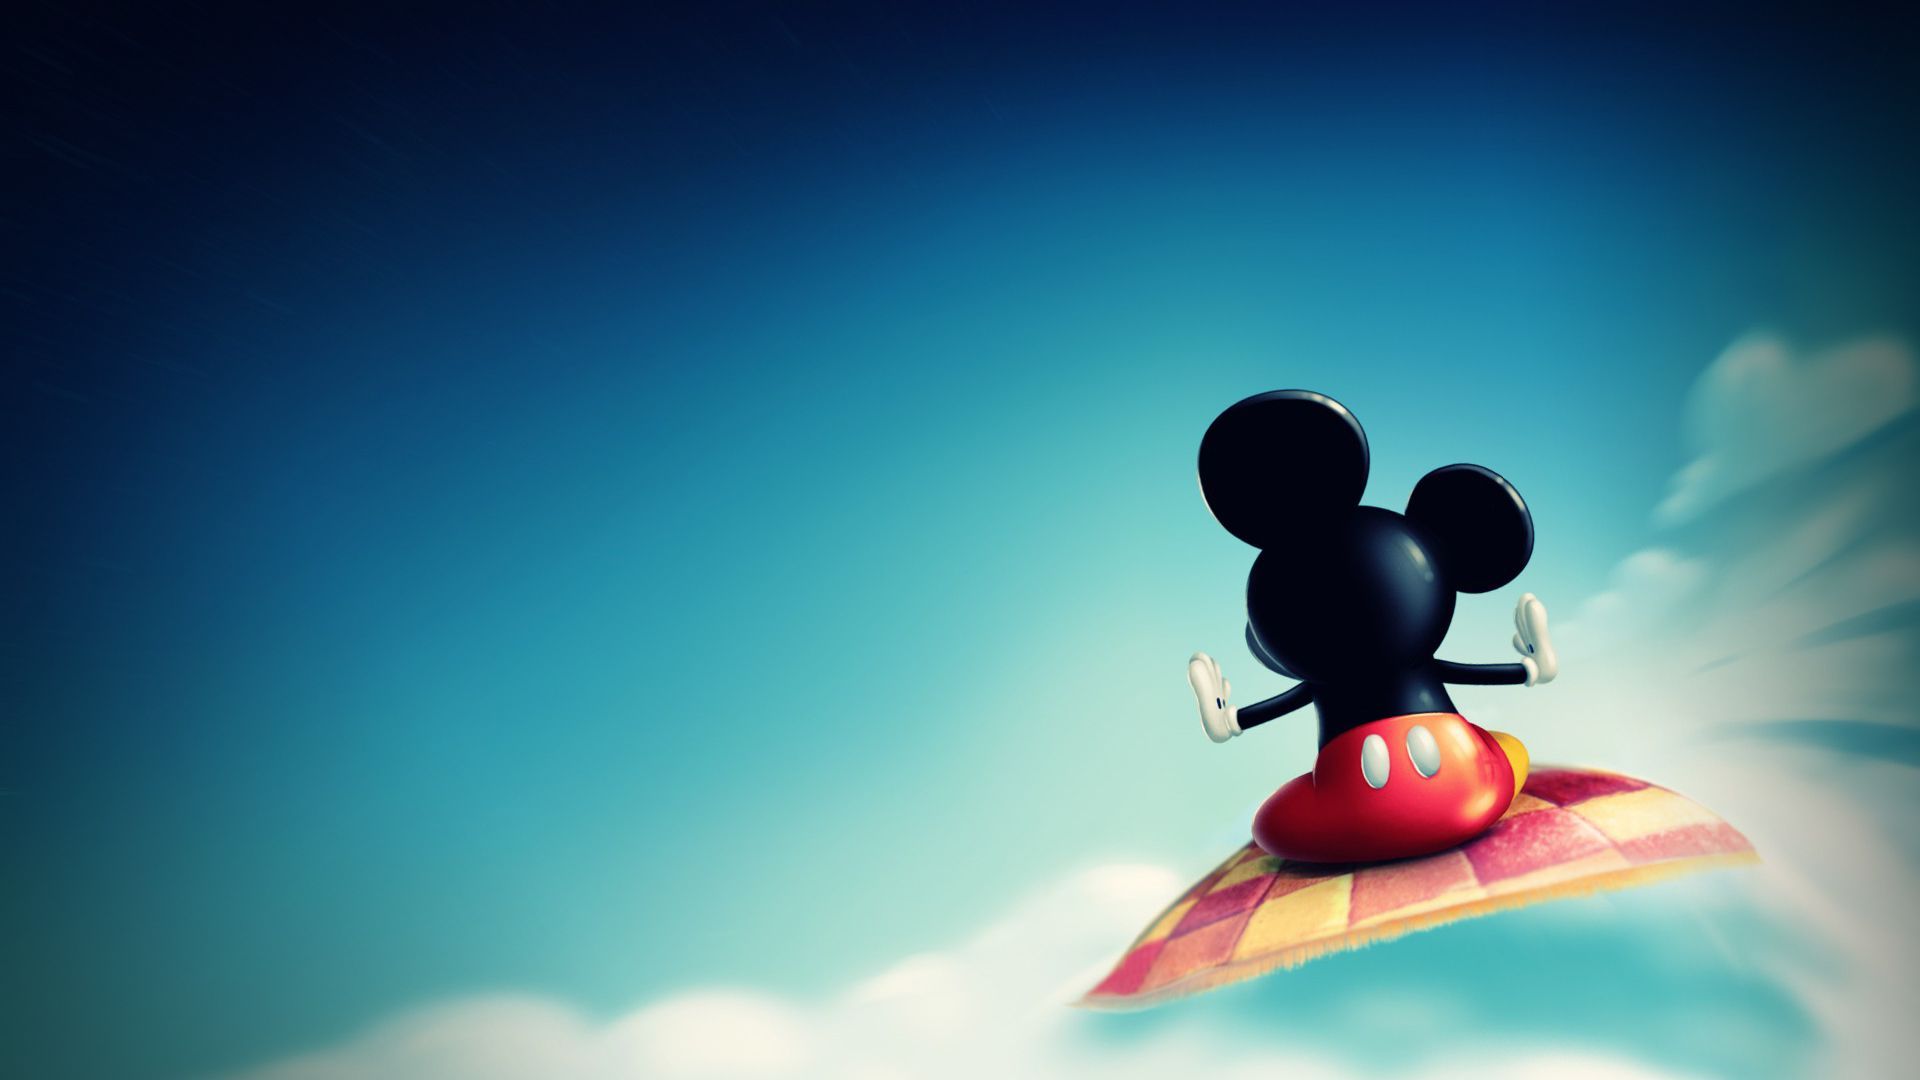 Mickey Mouse fondos de pantalla hd | HD Wallpaper | Disney en 2019 | Mickey